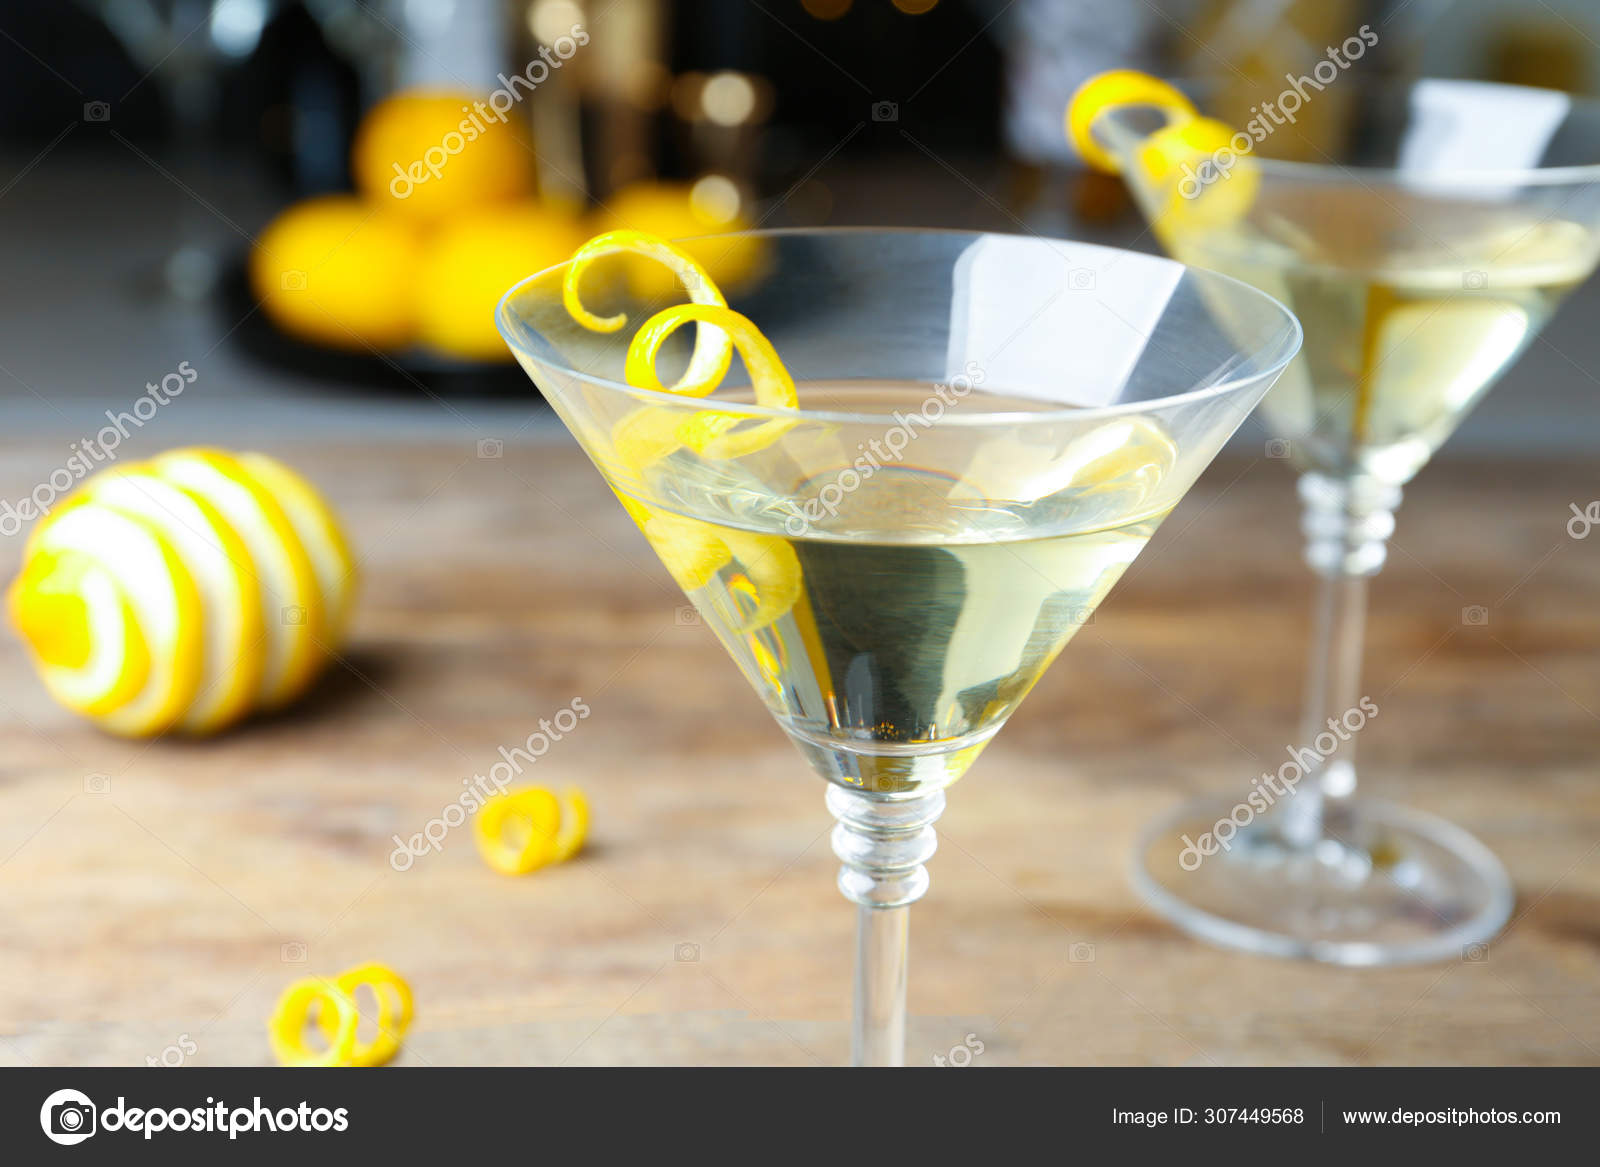 https://st4.depositphotos.com/16122460/30744/i/1600/depositphotos_307449568-stock-photo-glass-of-lemon-drop-martini.jpg